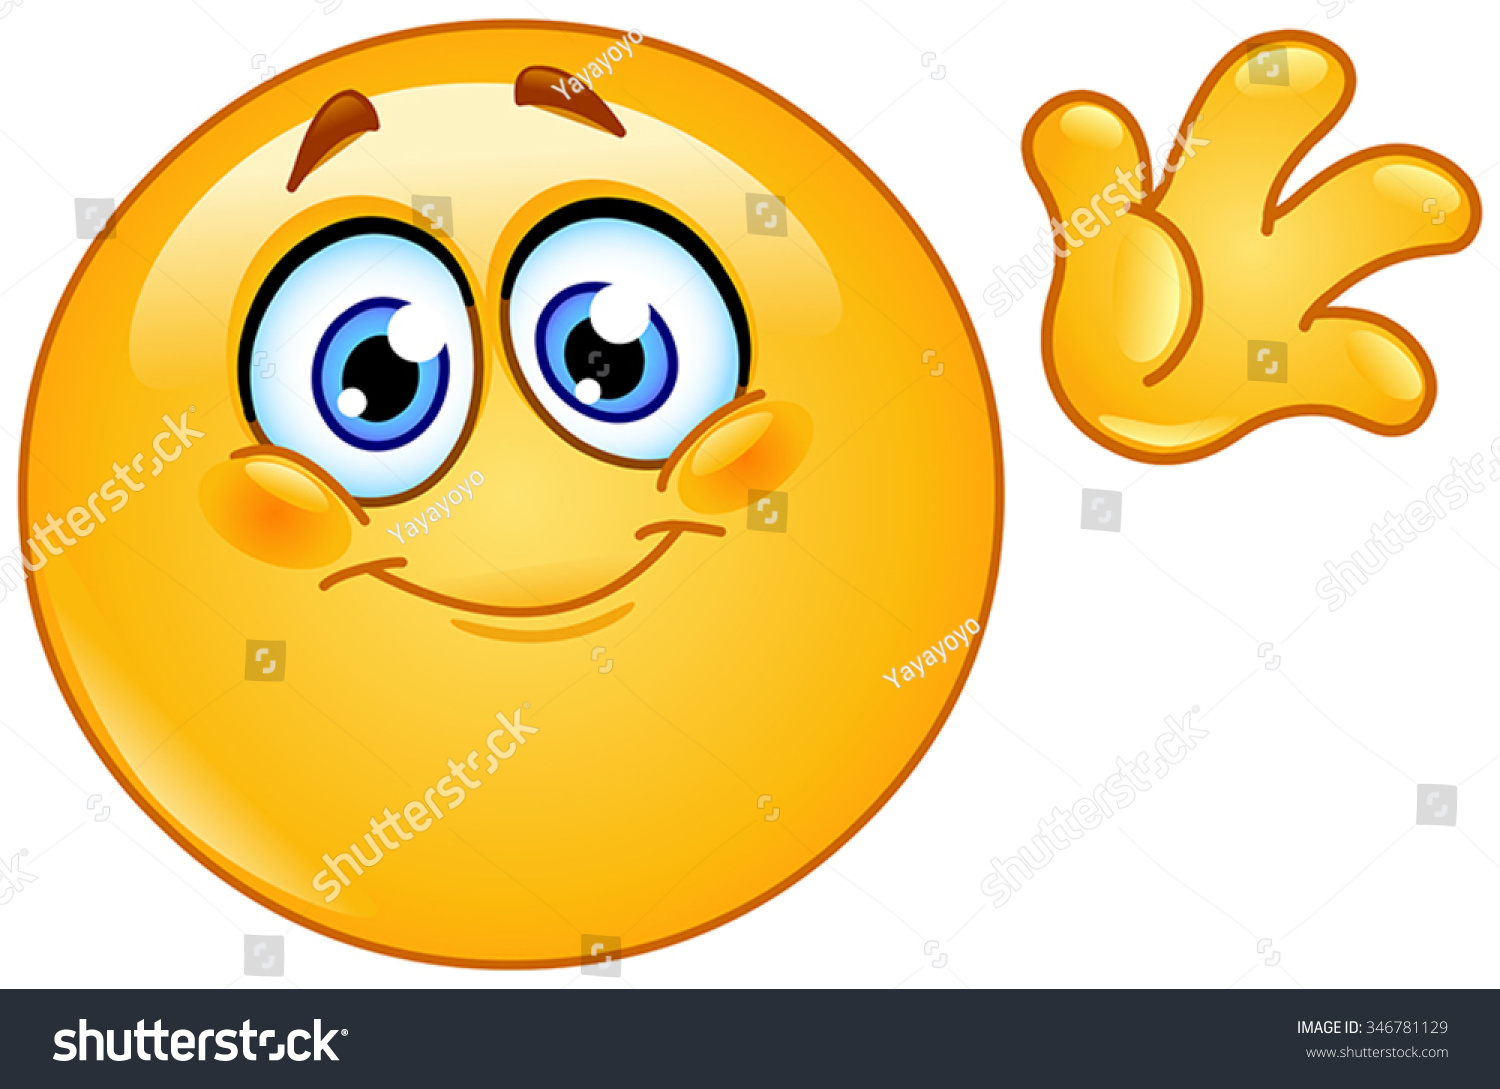 Cute Emoticon Waving Hello Stock Vector 346781129 - Shutterstock